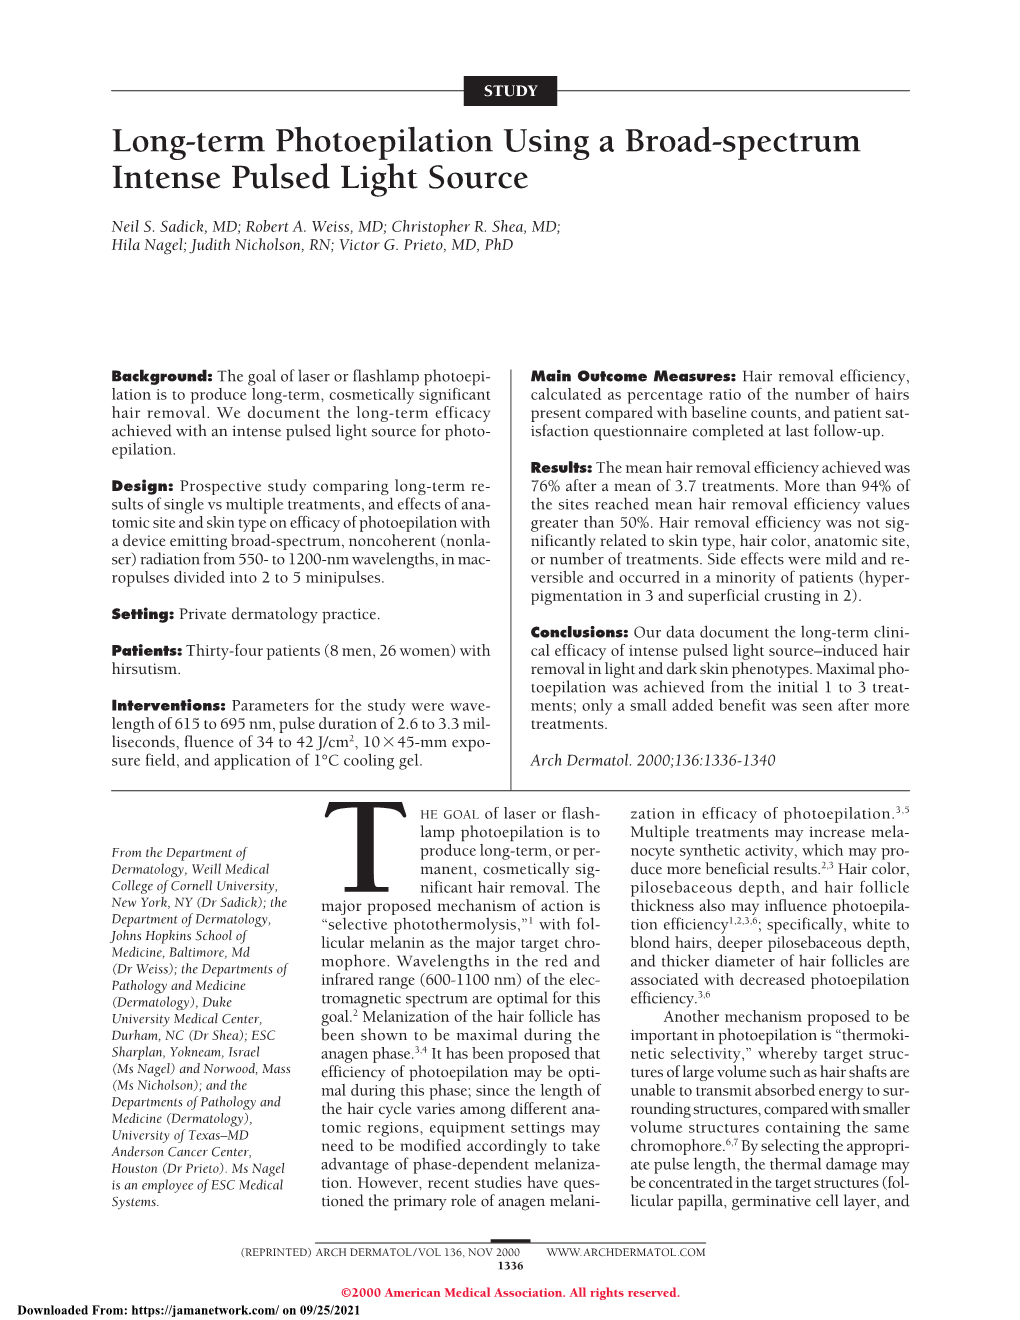 Long-Term Photoepilation Using a Broad-Spectrum Intense Pulsed Light Source